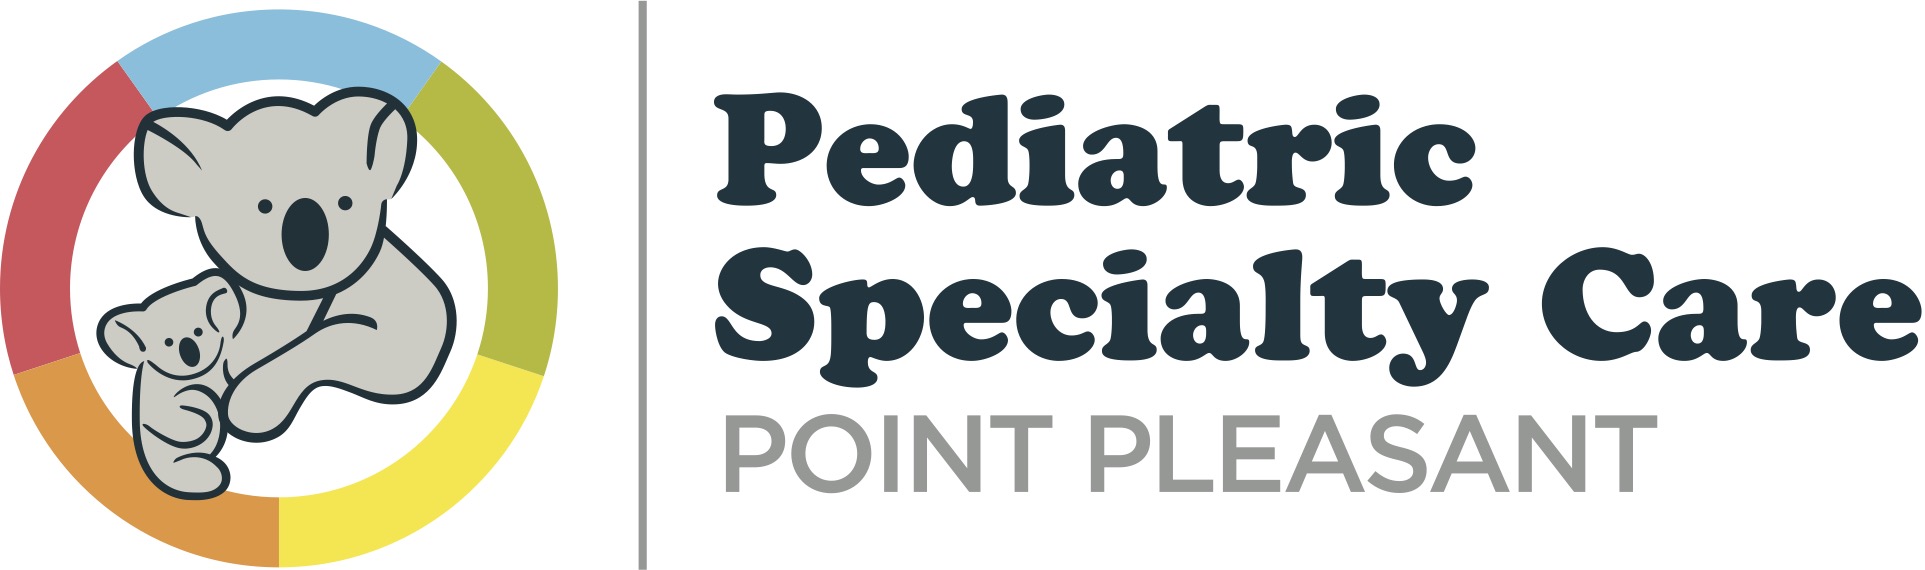 Point Pleasant, PA - Pediatric Specialty Care | Location logo